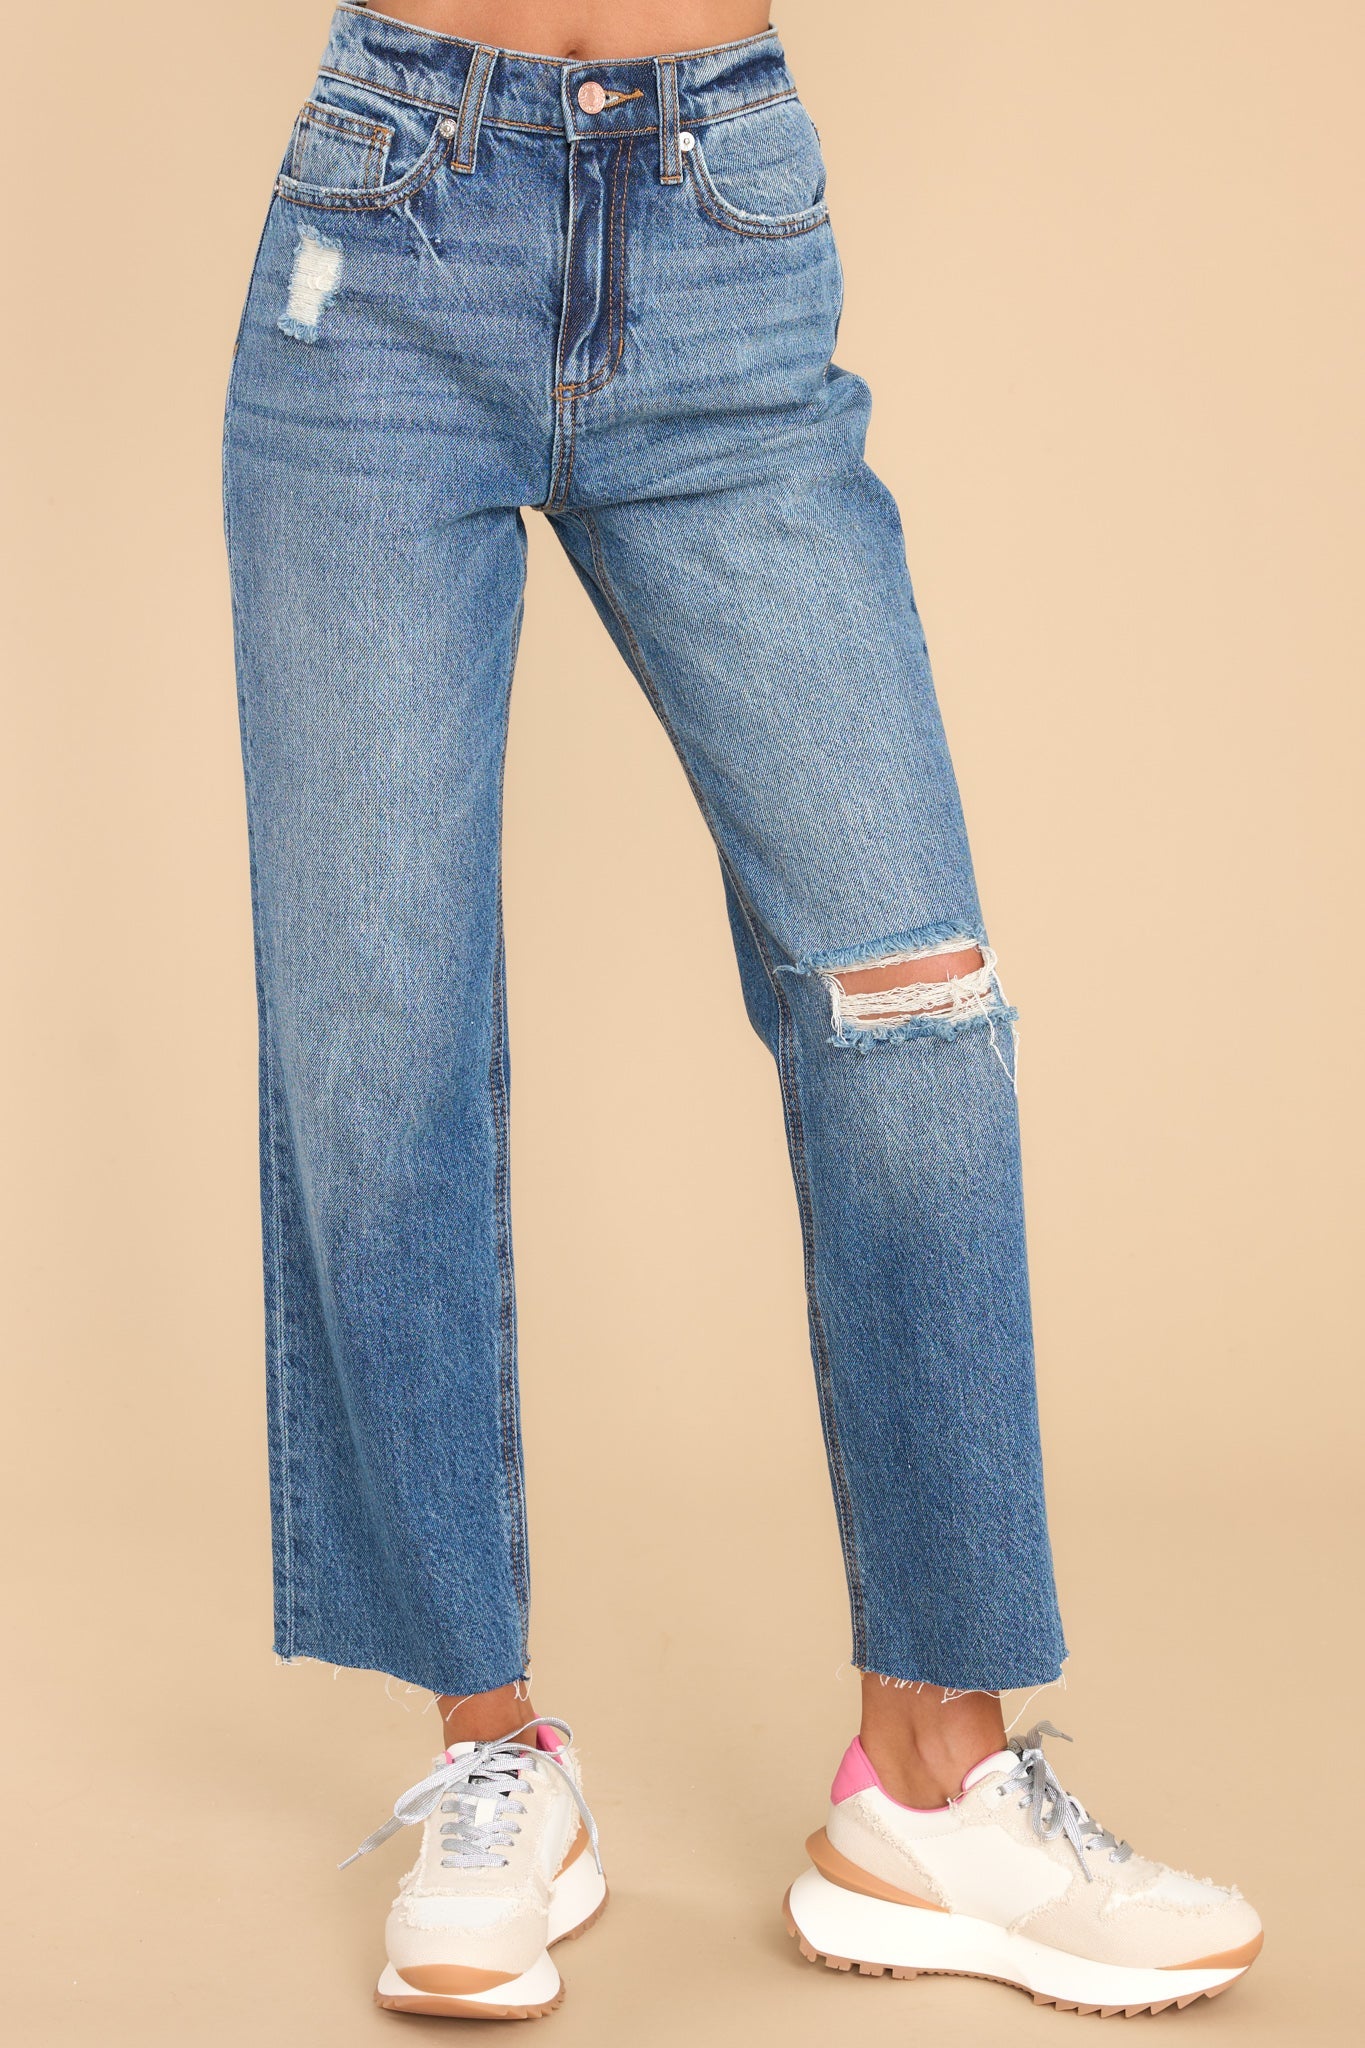 Attractive Medium Wash Jeans - Straight Leg Jeans